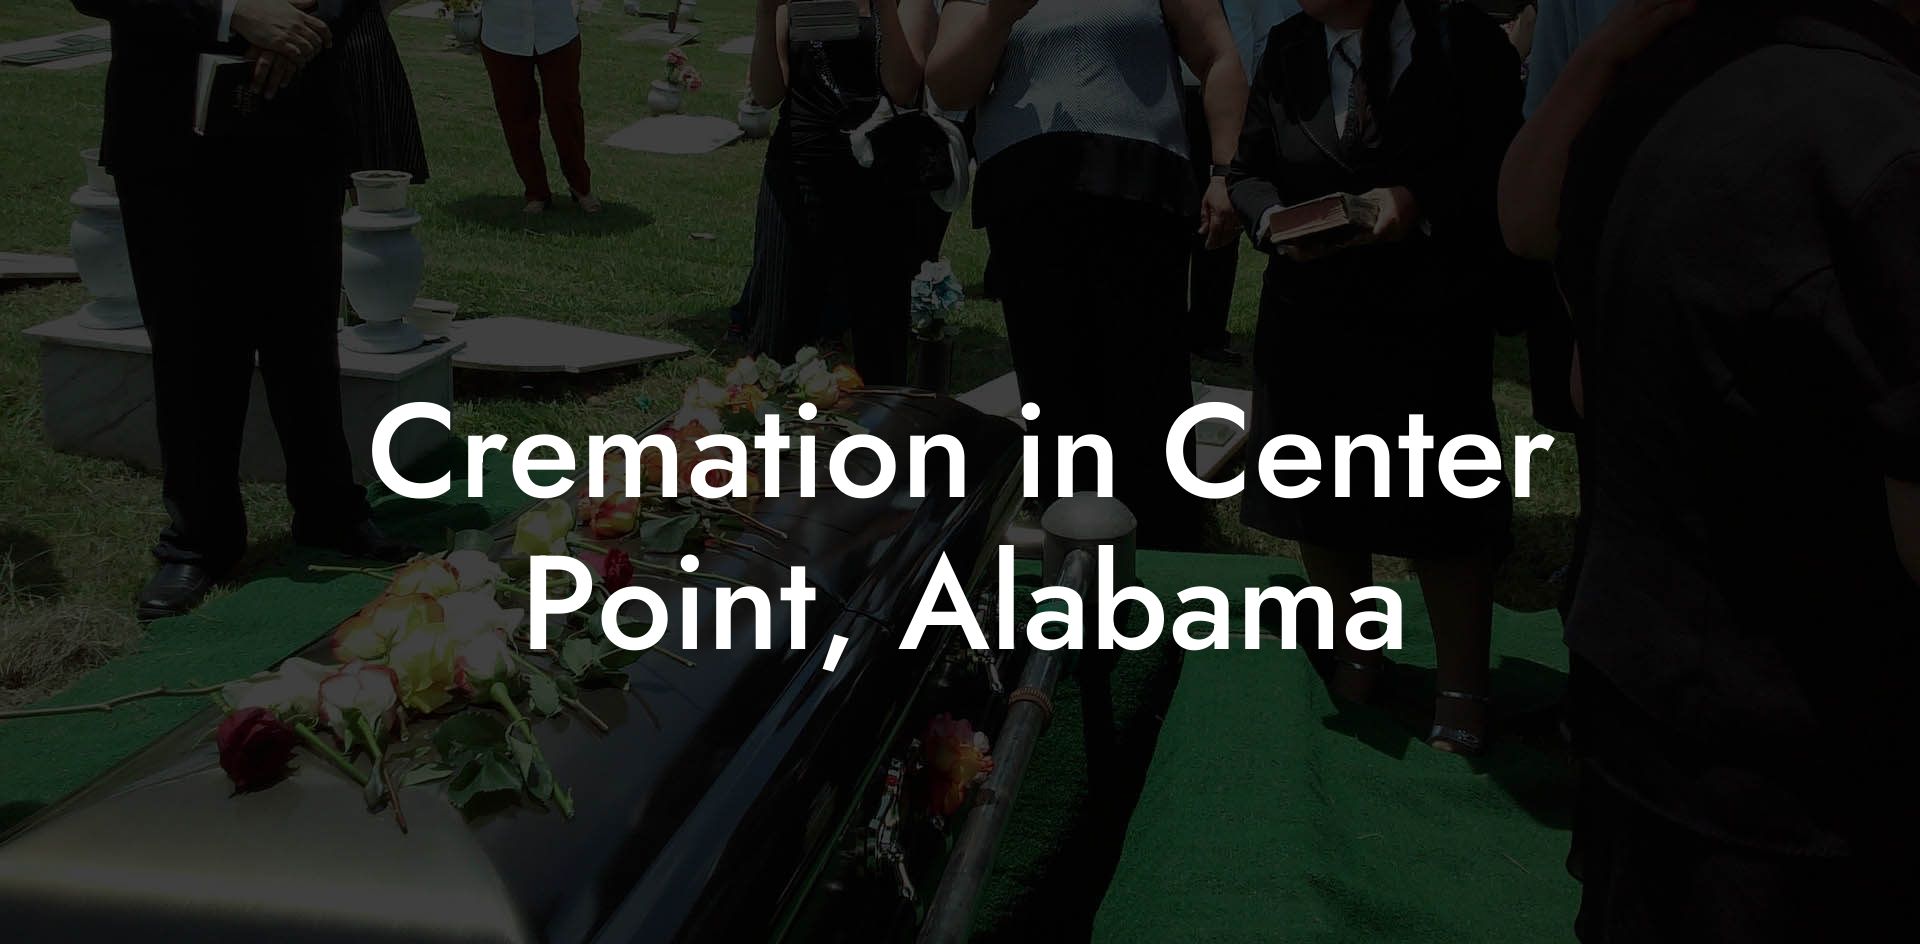 Cremation in Center Point, Alabama